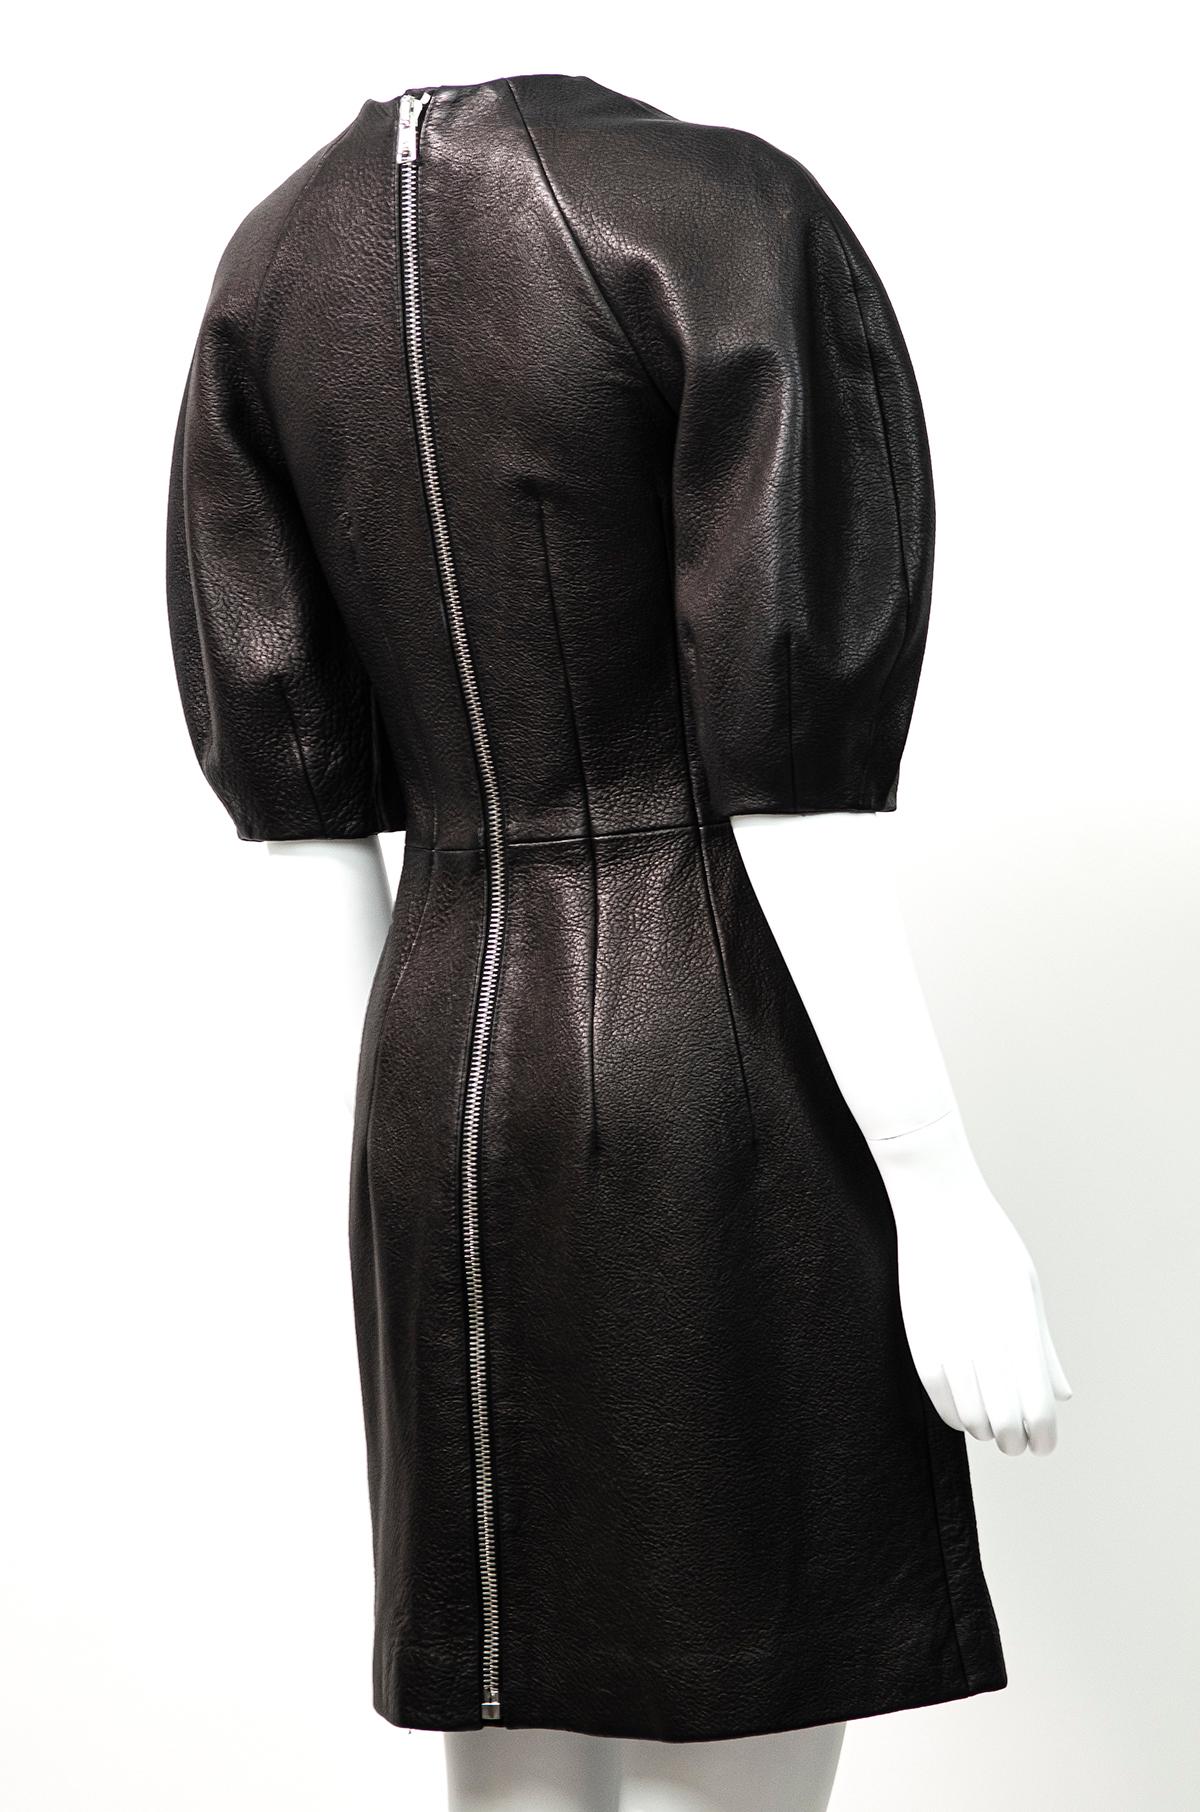 Women's ALEXANDER MCQUEEN Textured Leather Bubble Dress For Sale